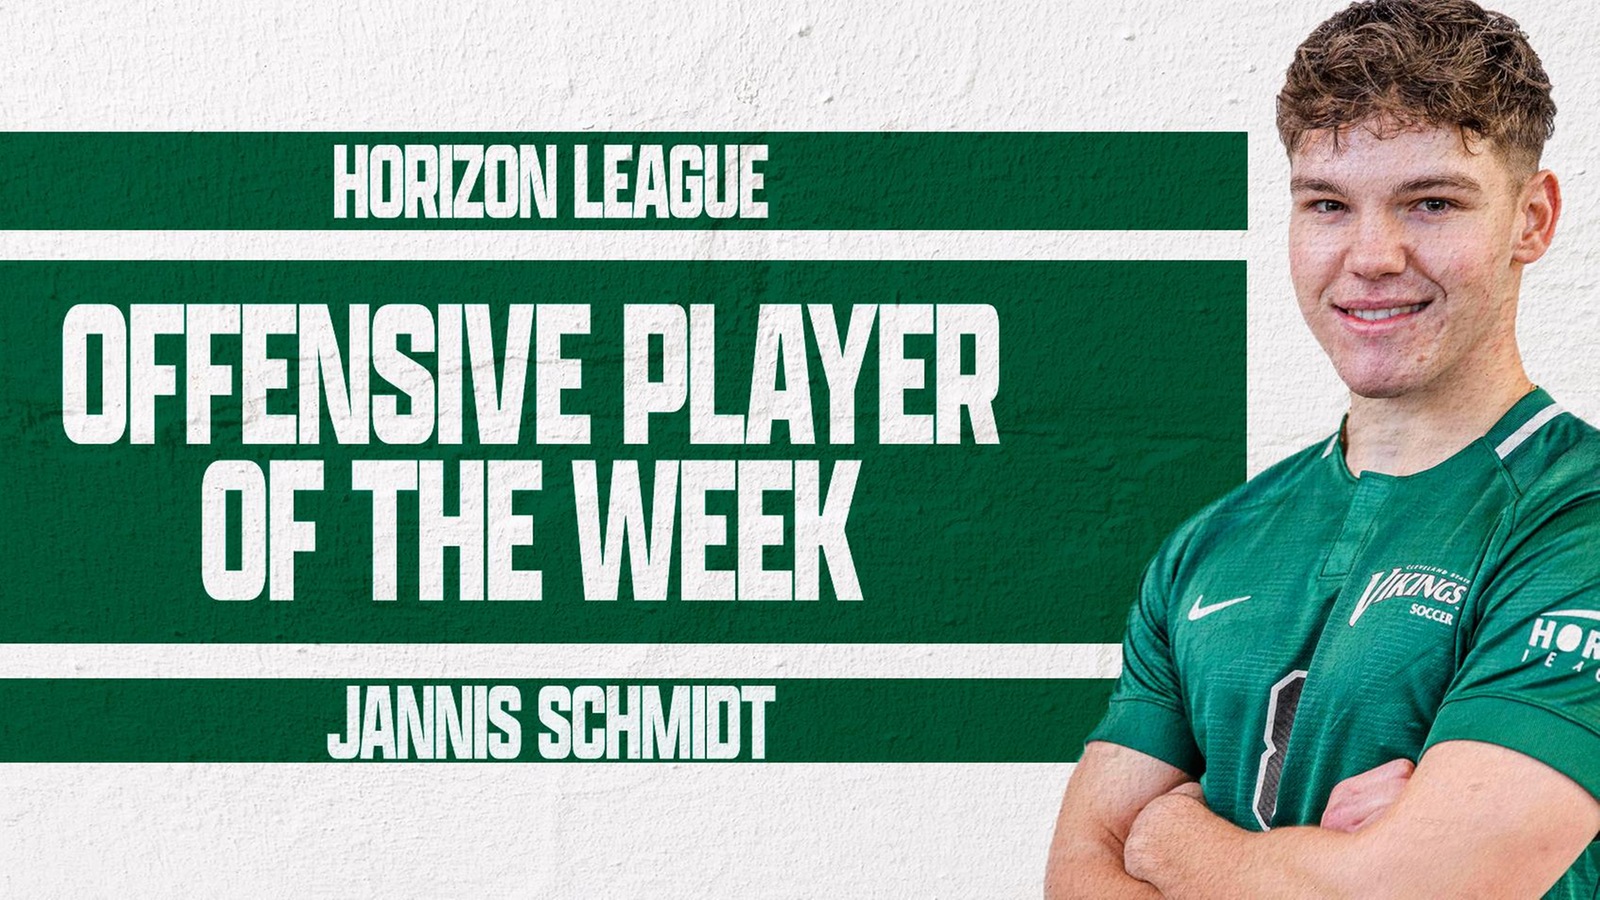 Jannis Schmidt Tabbed #HLMSOC Offensive Player of the Week